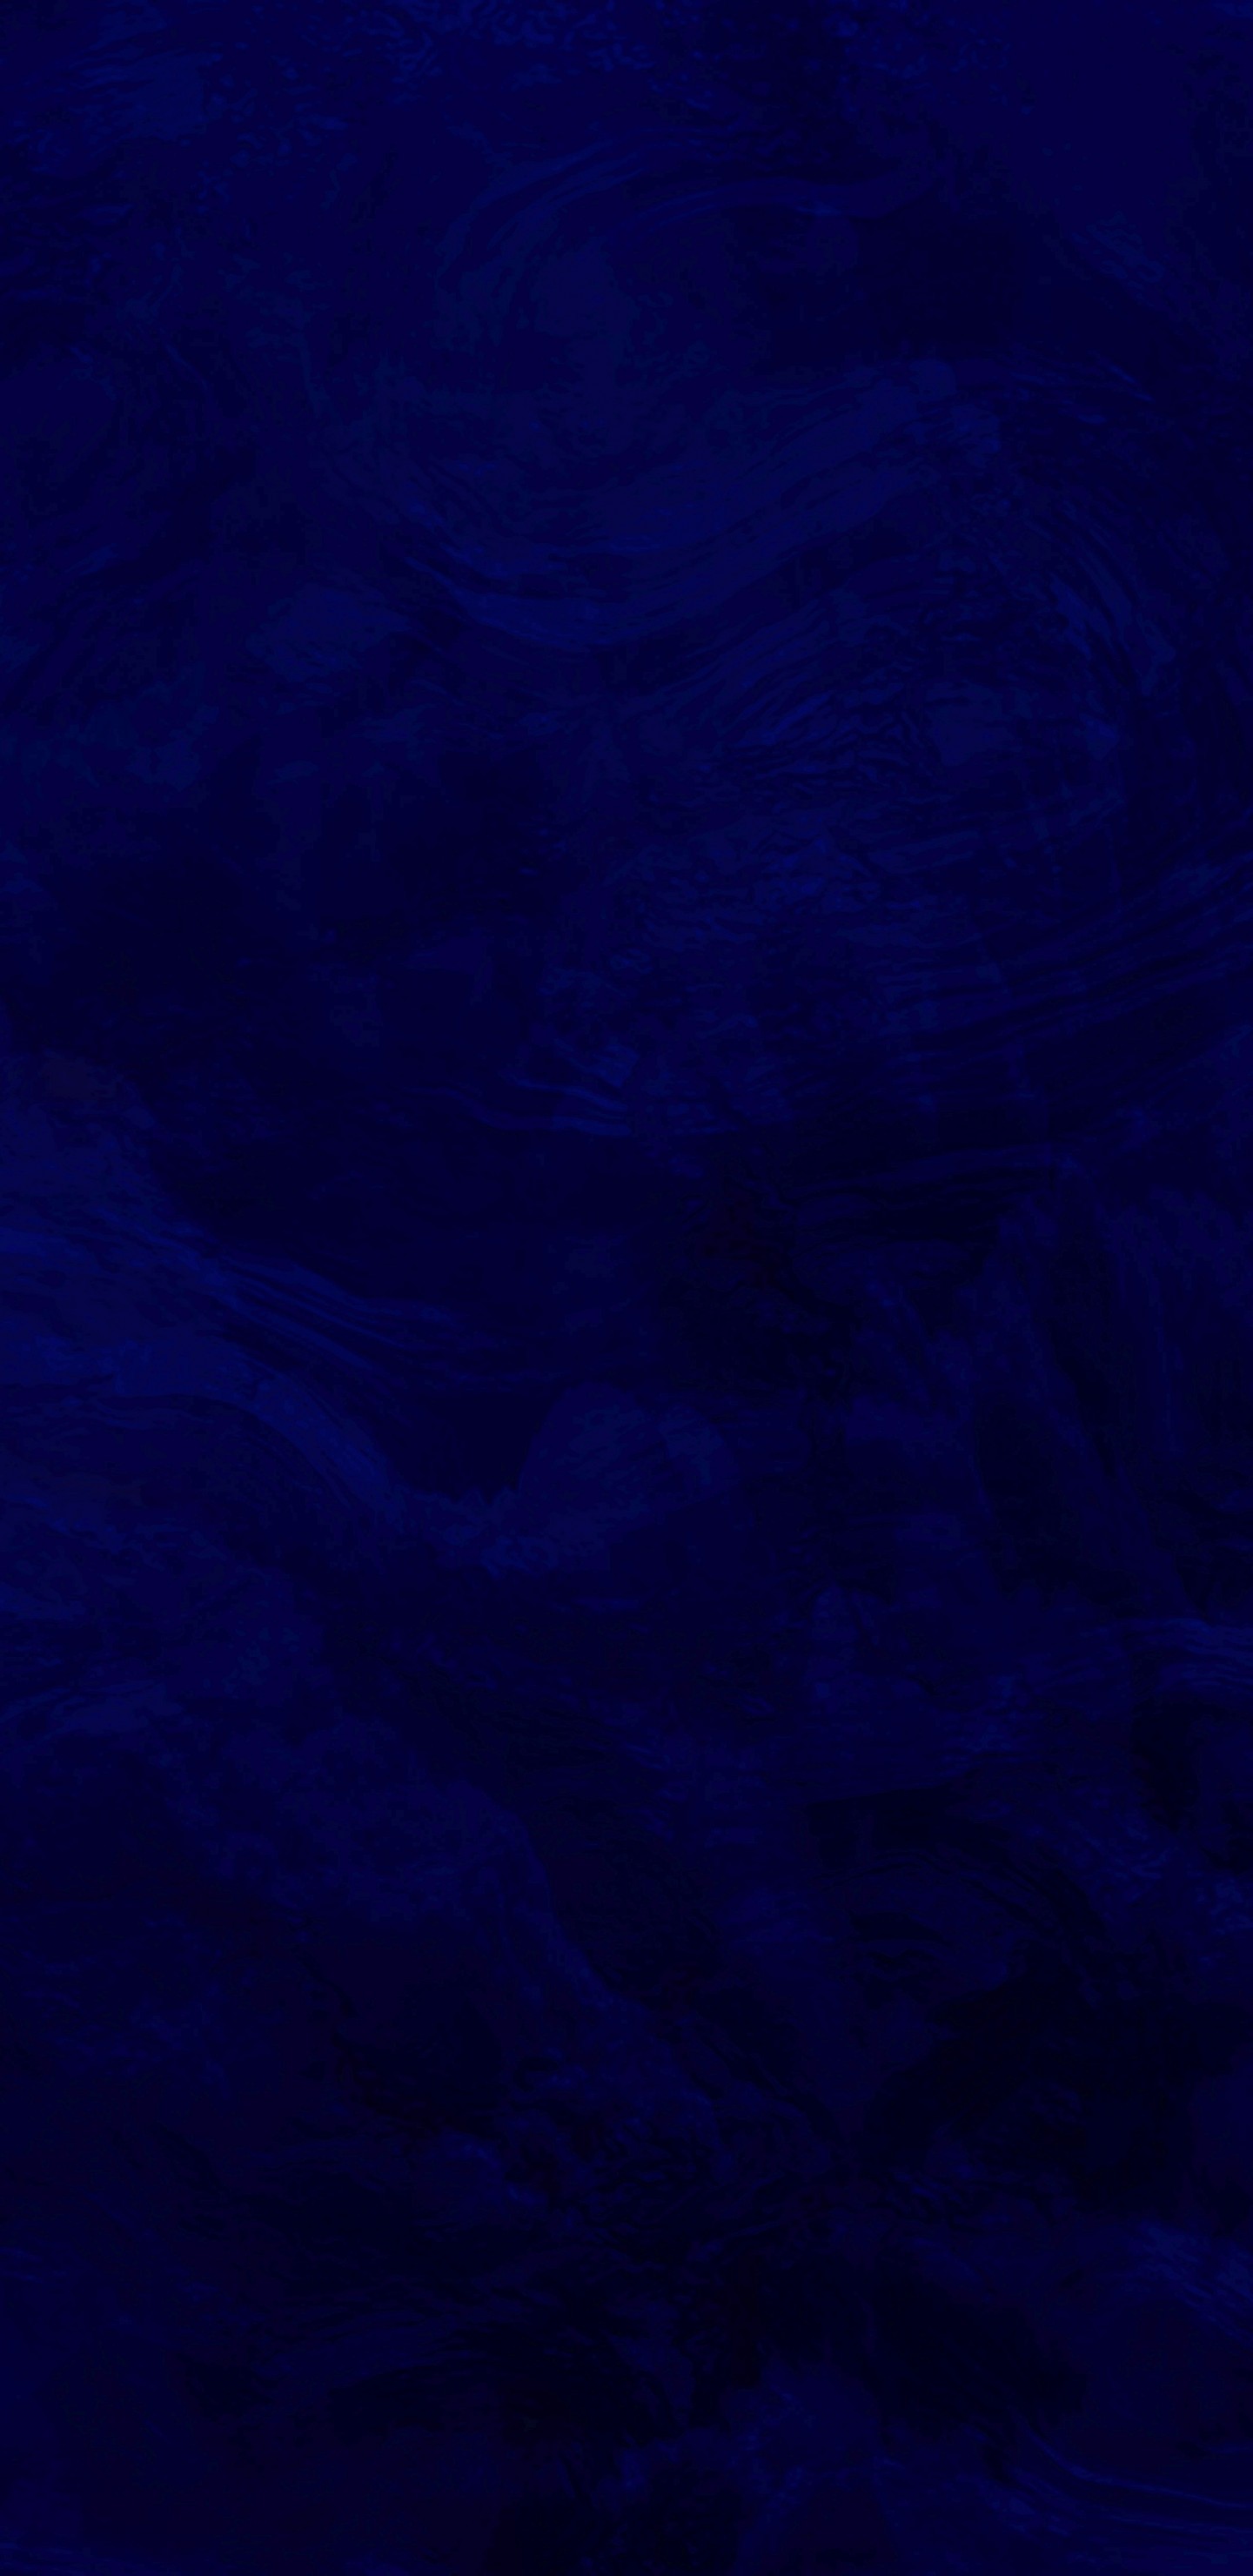 Blue Background, Dark, Texture - Cobalt Blue - 1440x2960 Wallpaper -  